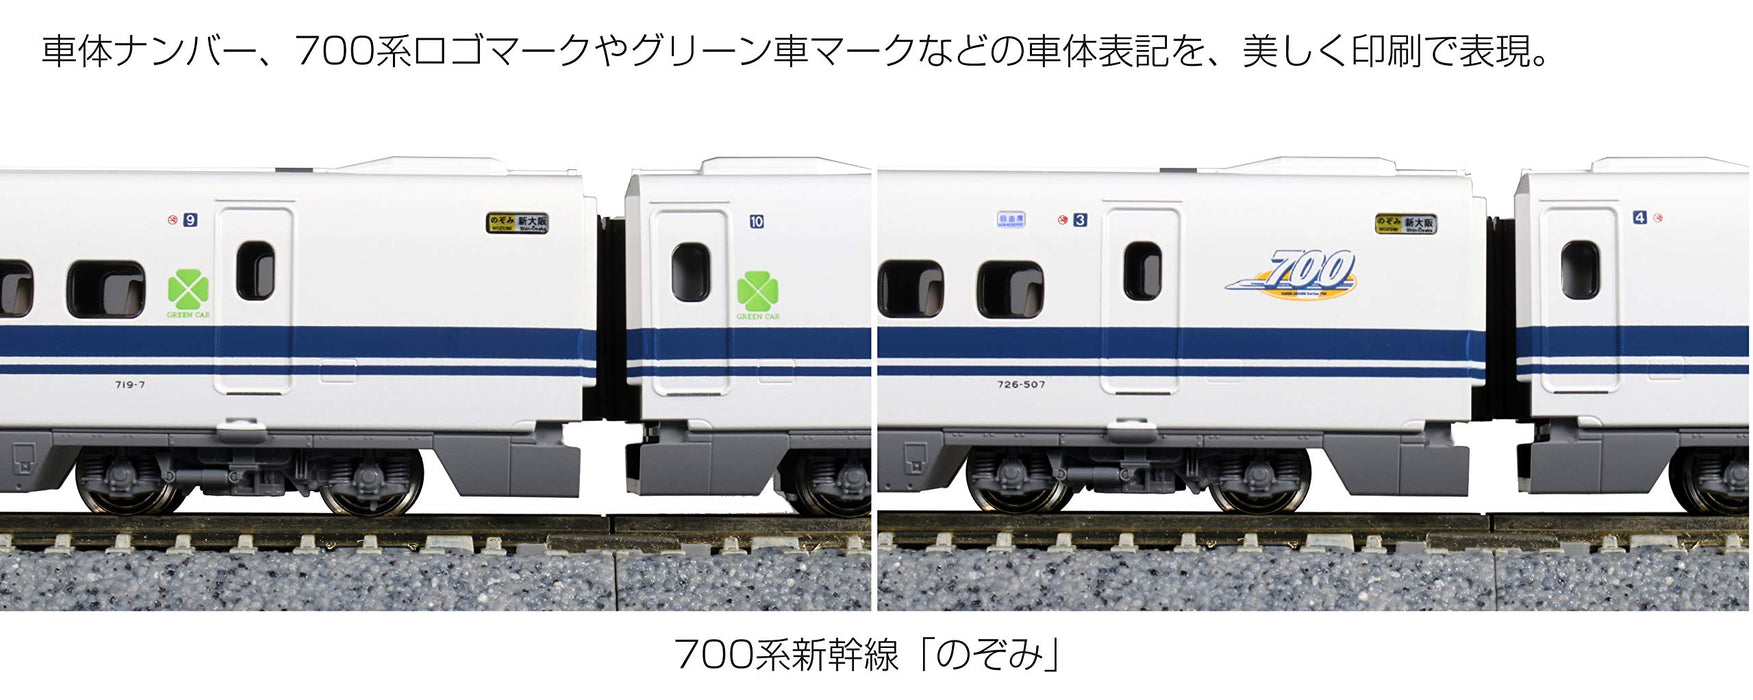 Kato N Gauge 700 Series Nozomi 8-Car Basic Set - Shinkansen Model Train 10-1645